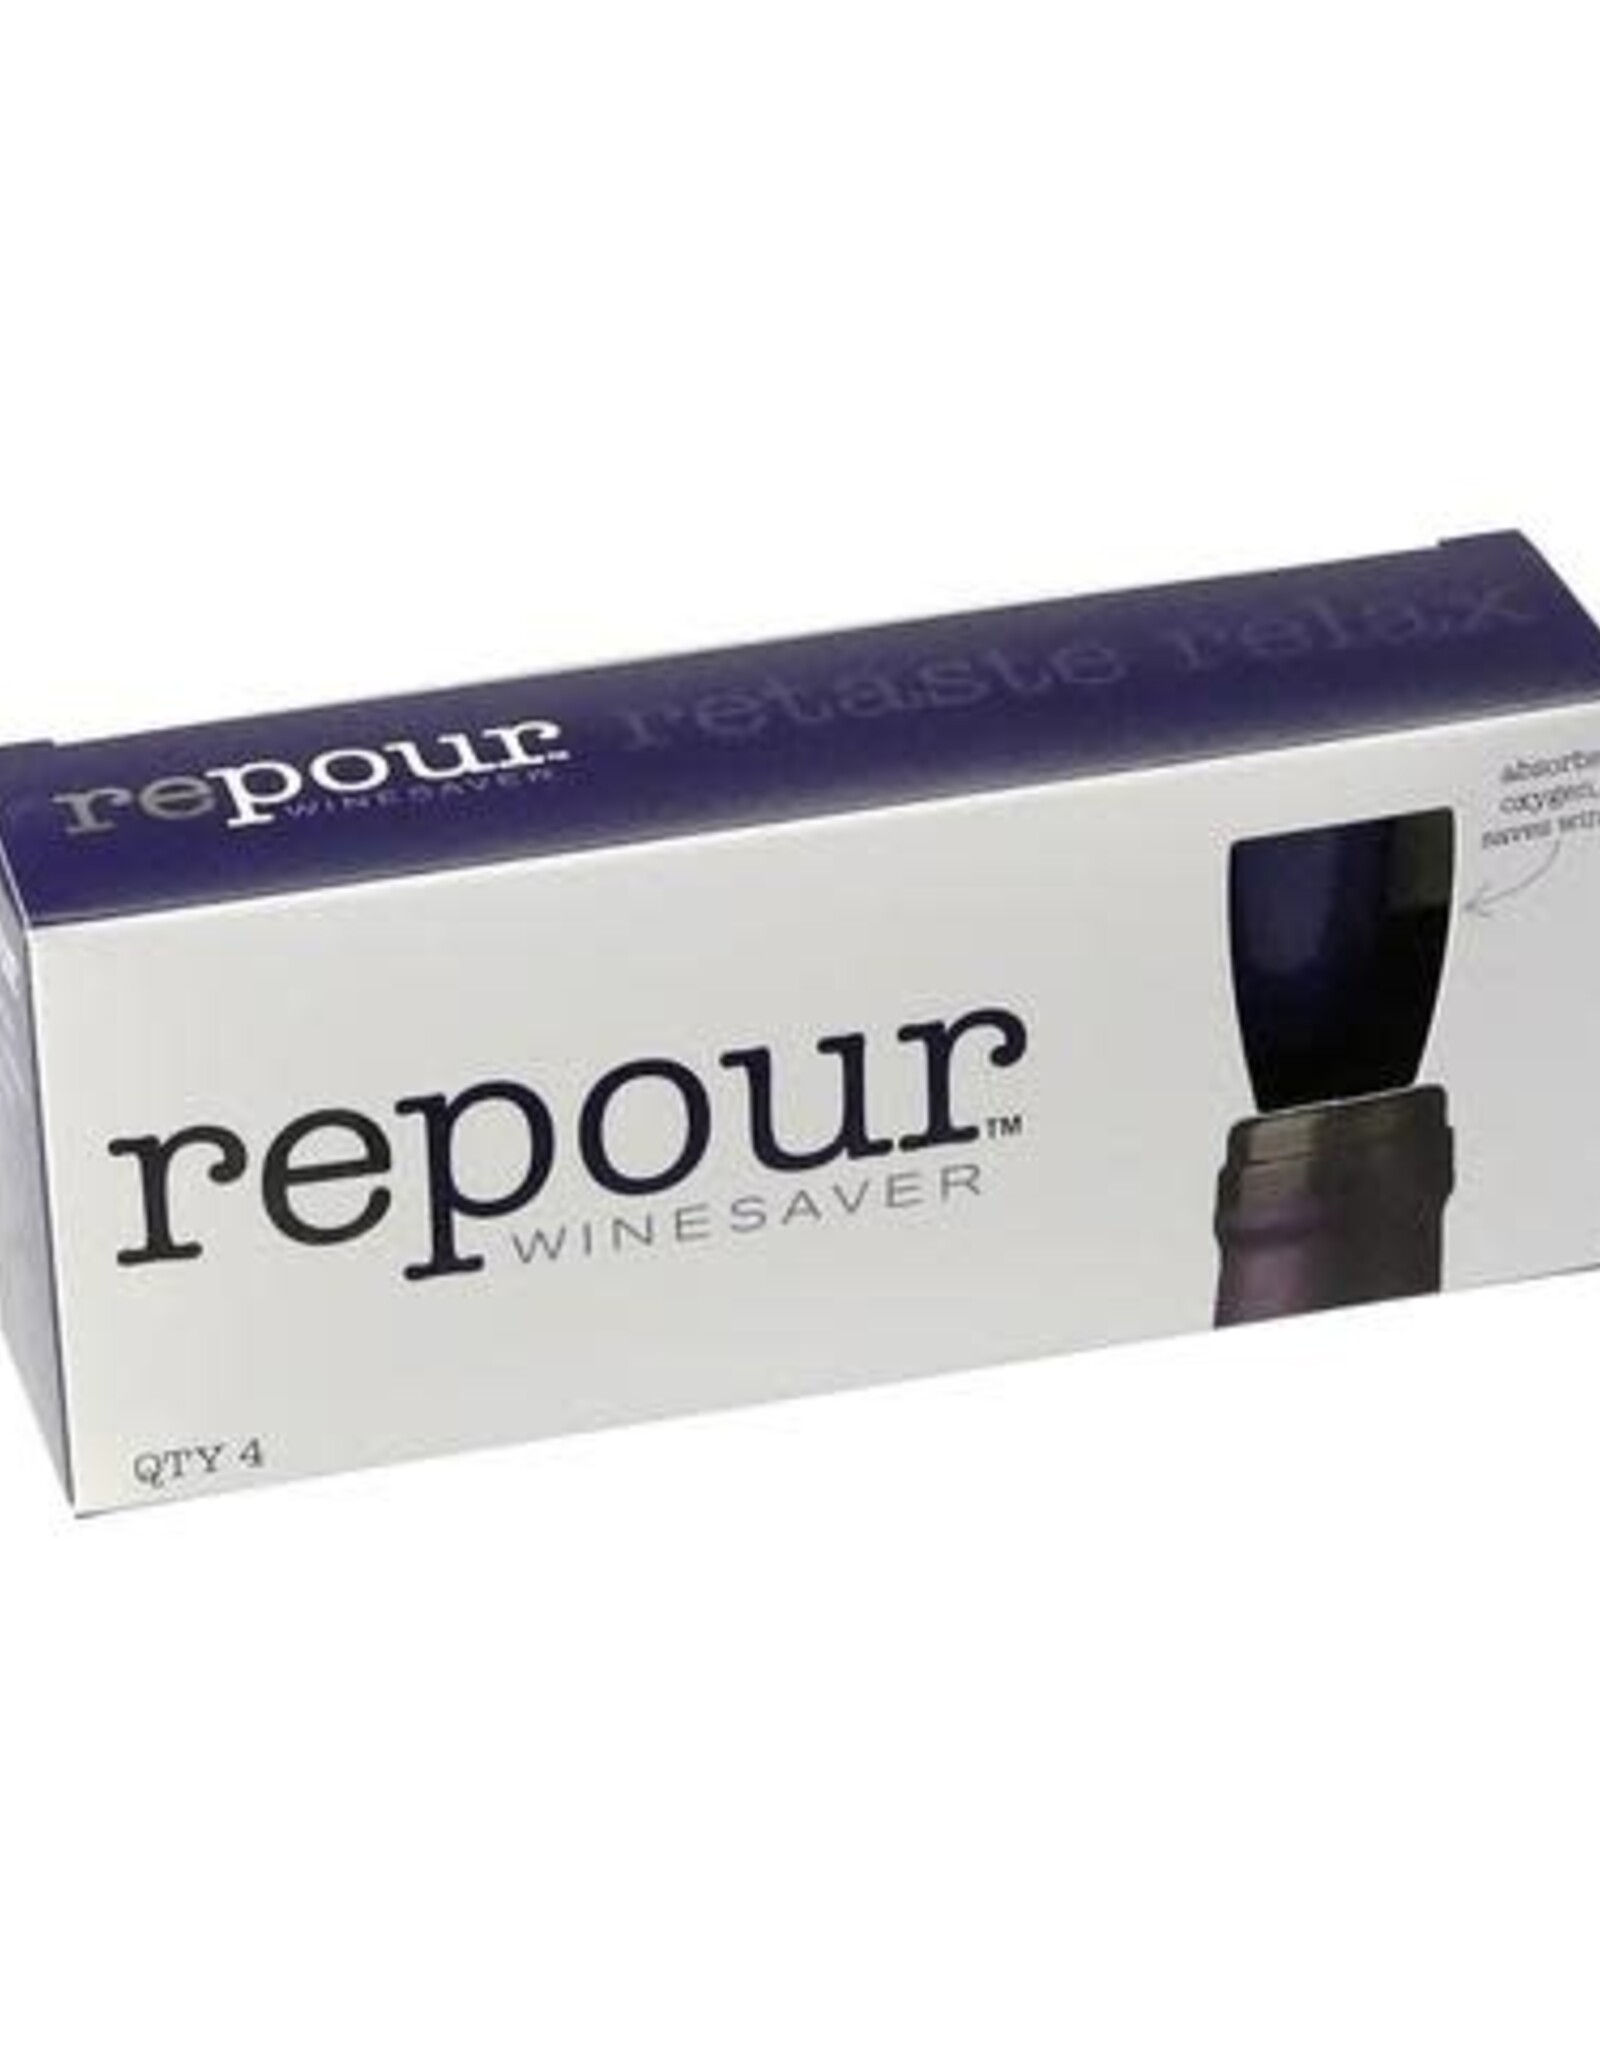 Repour Repour Wine Saver Four Pack